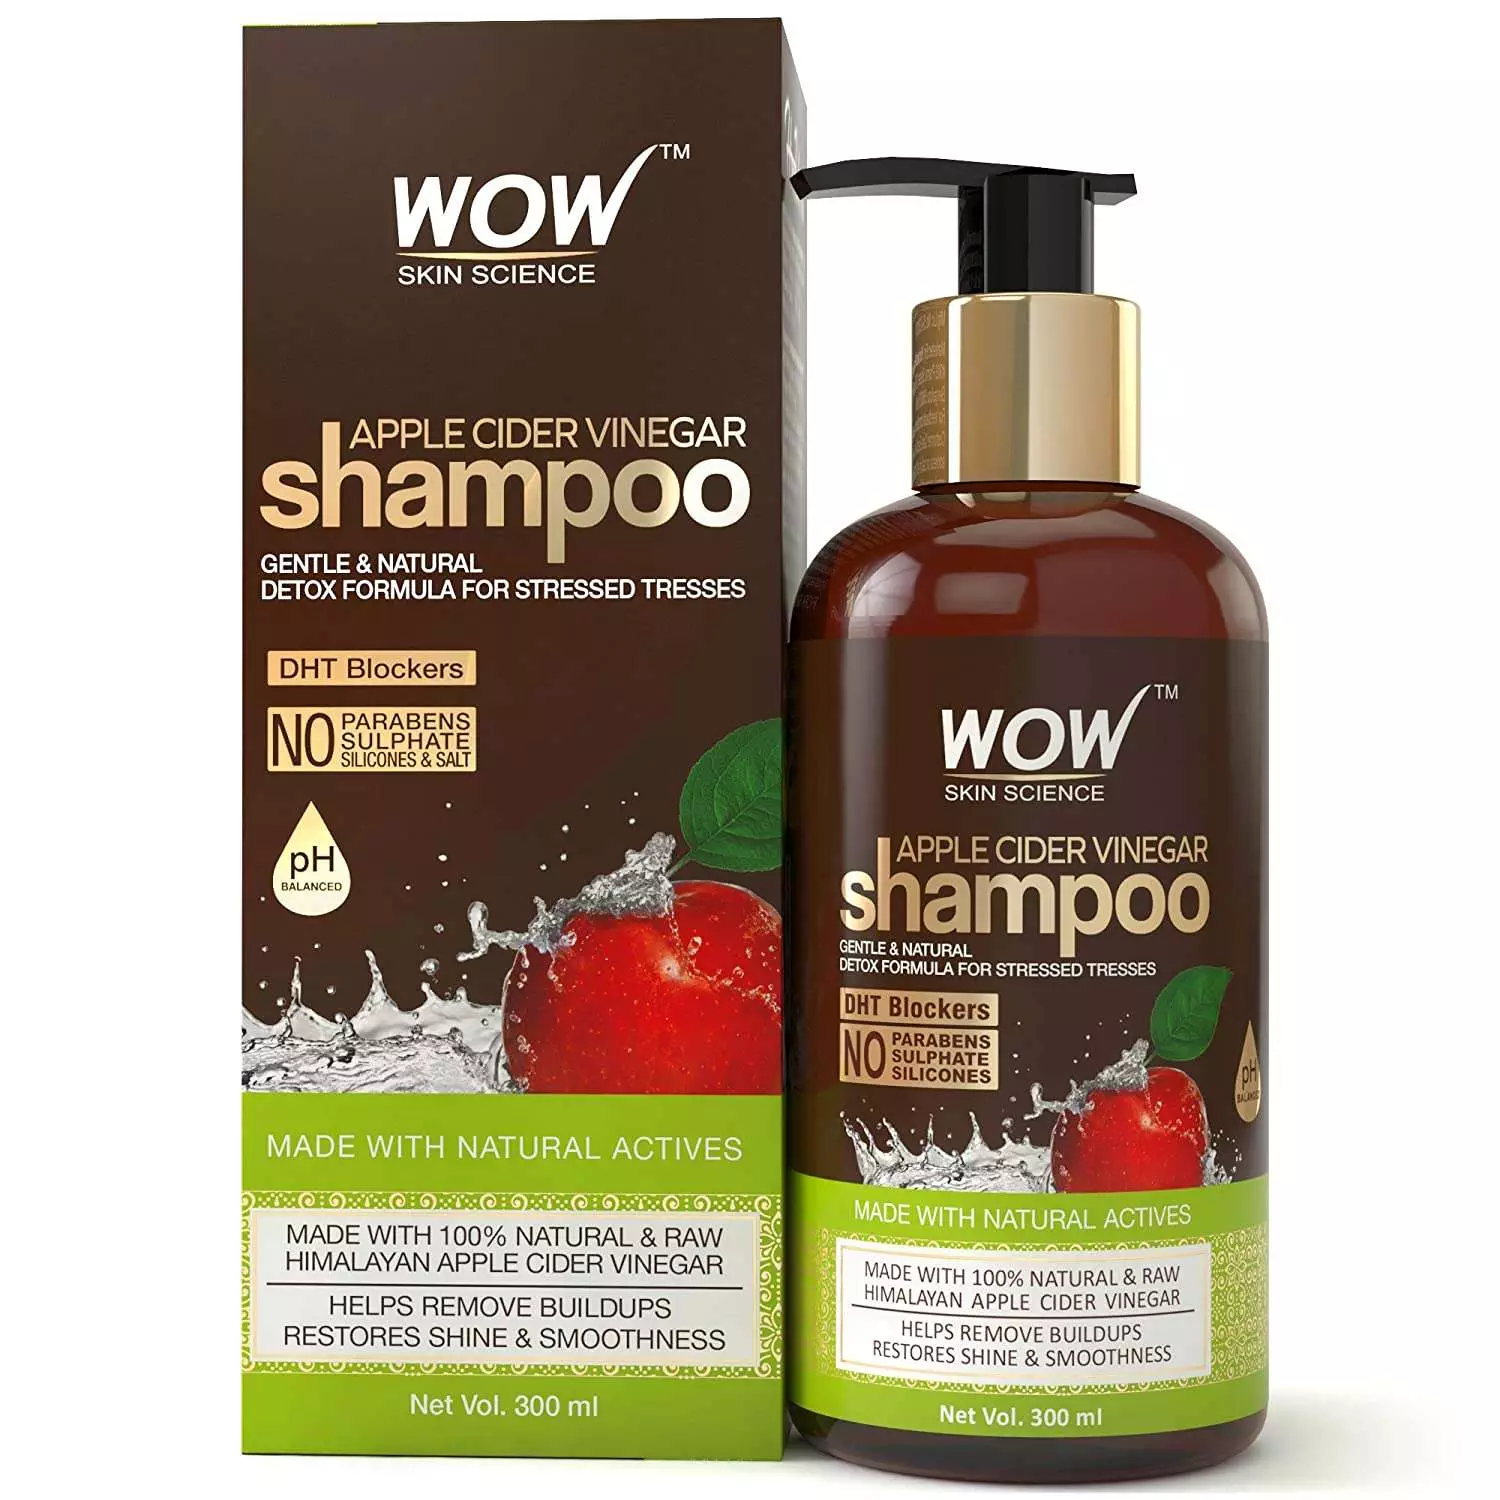 wow apple cider vinegar shampoo review